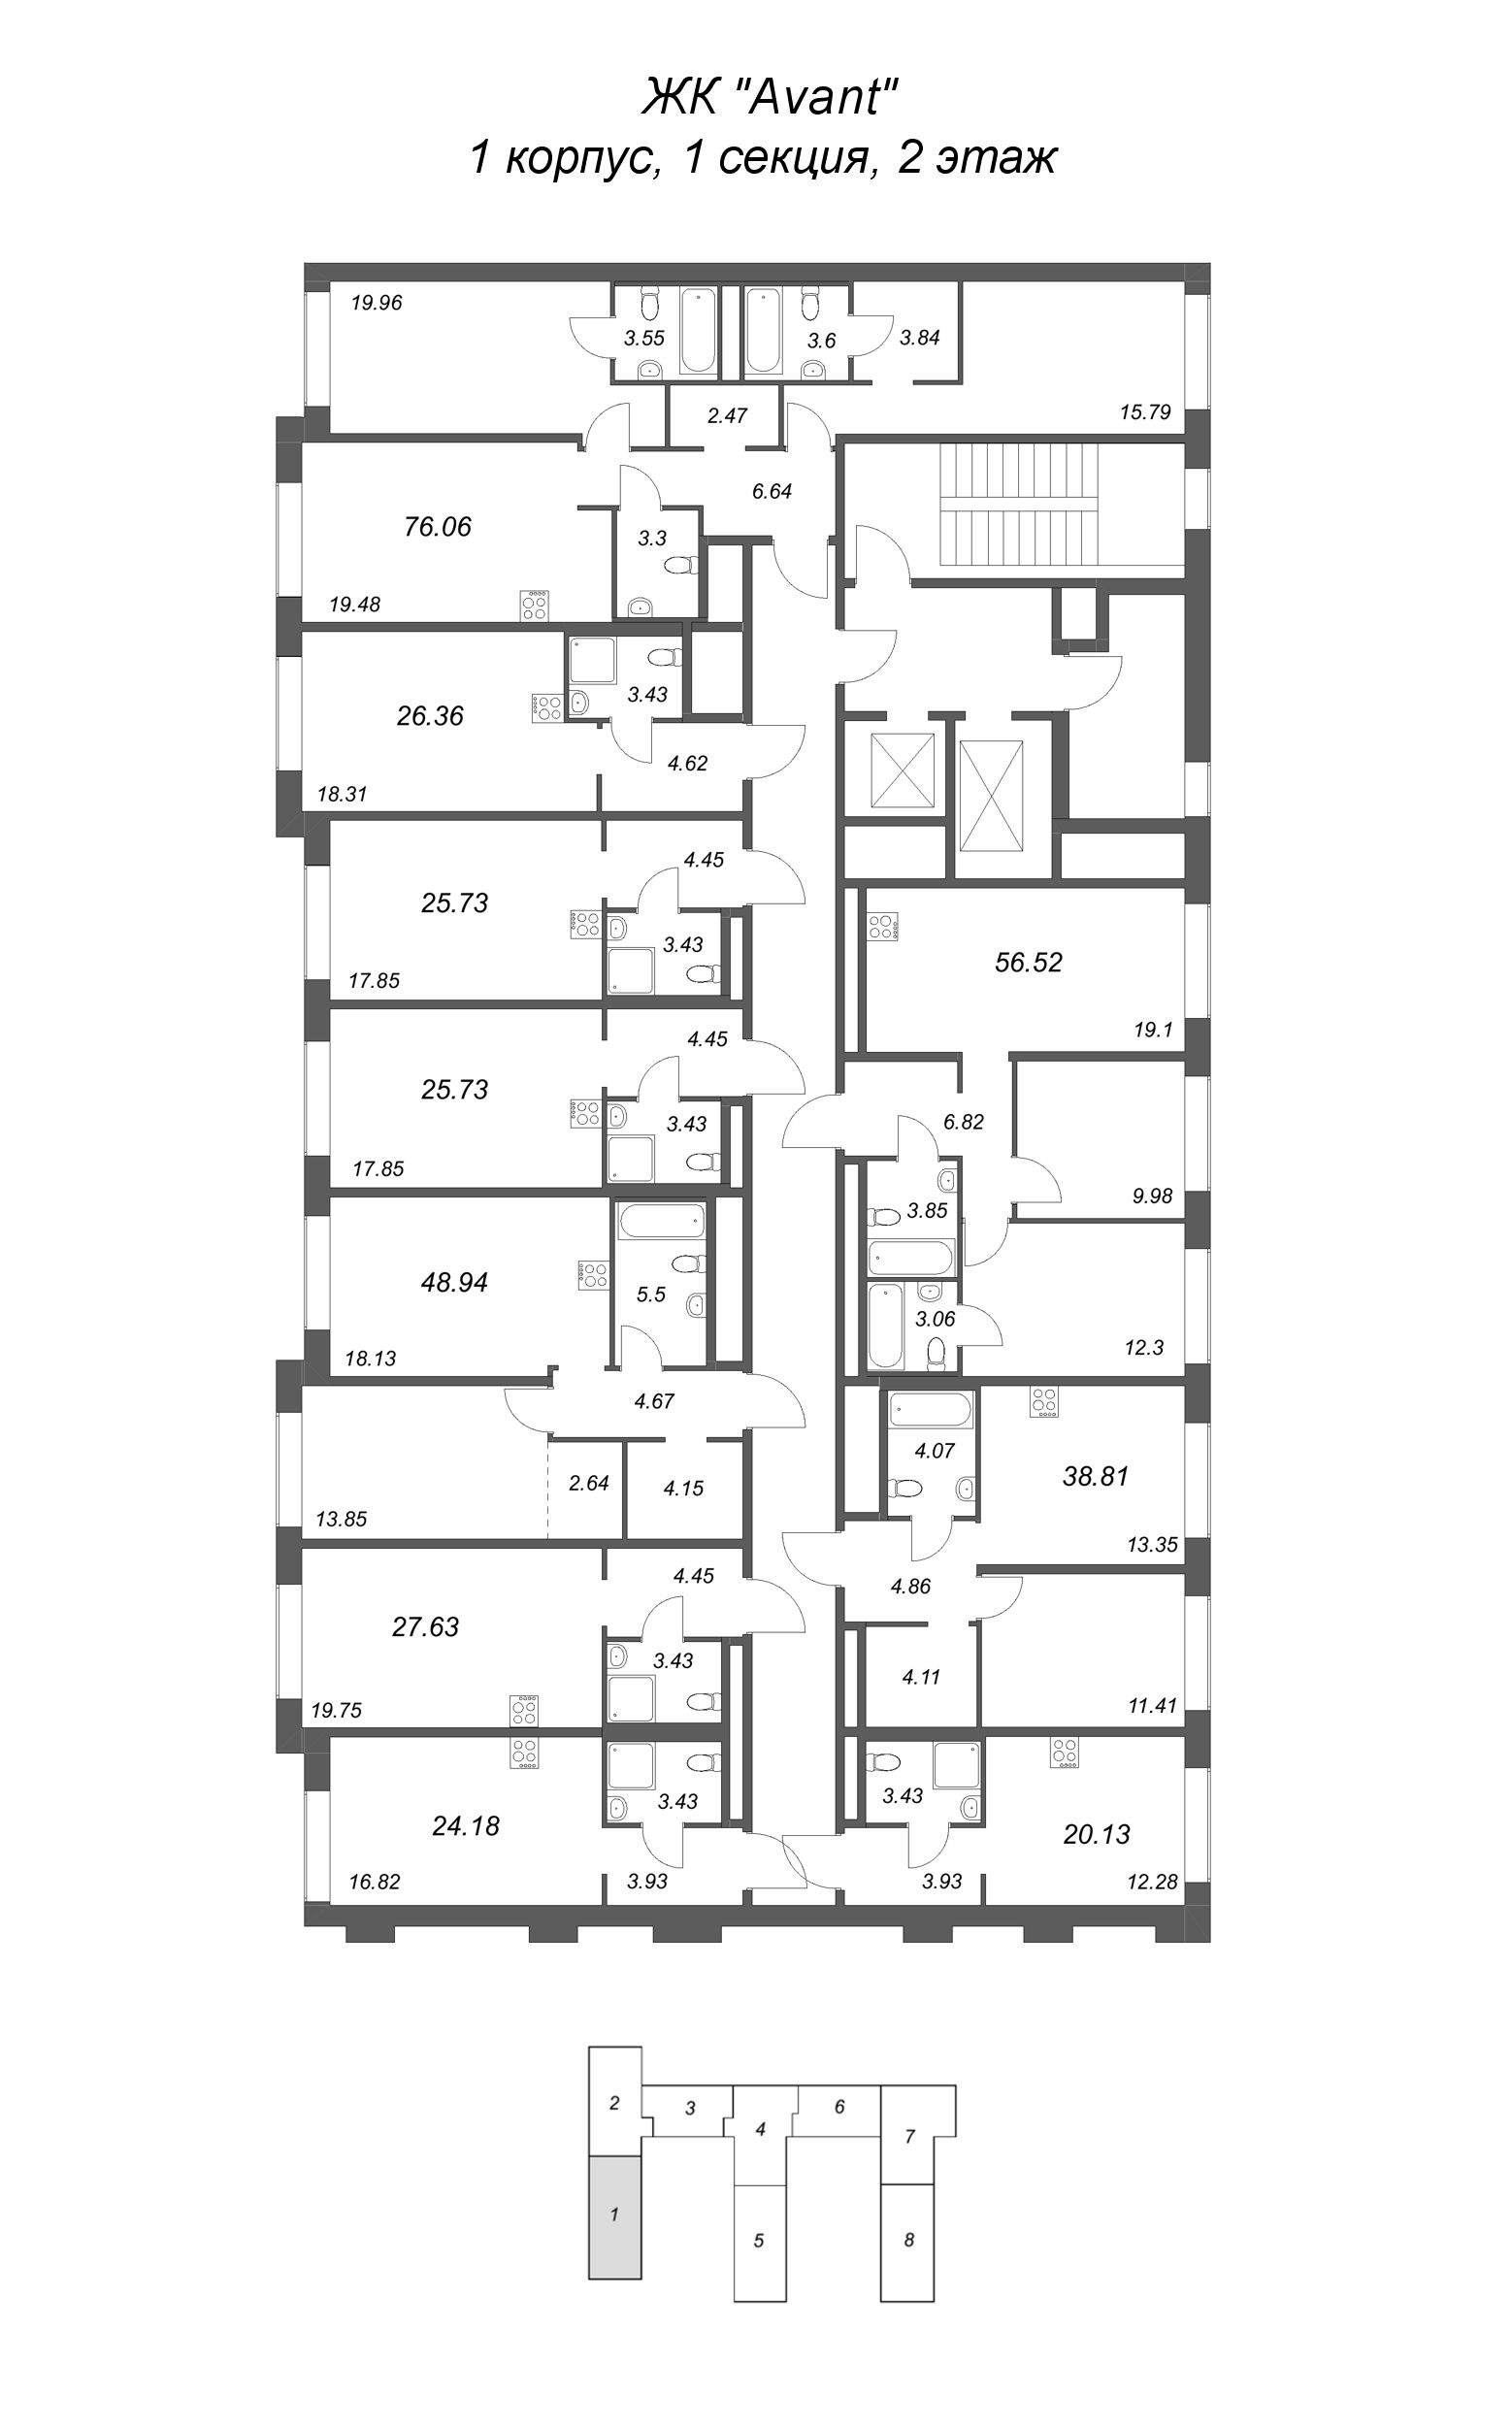 3-комнатная (Евро) квартира, 56.52 м² - планировка этажа